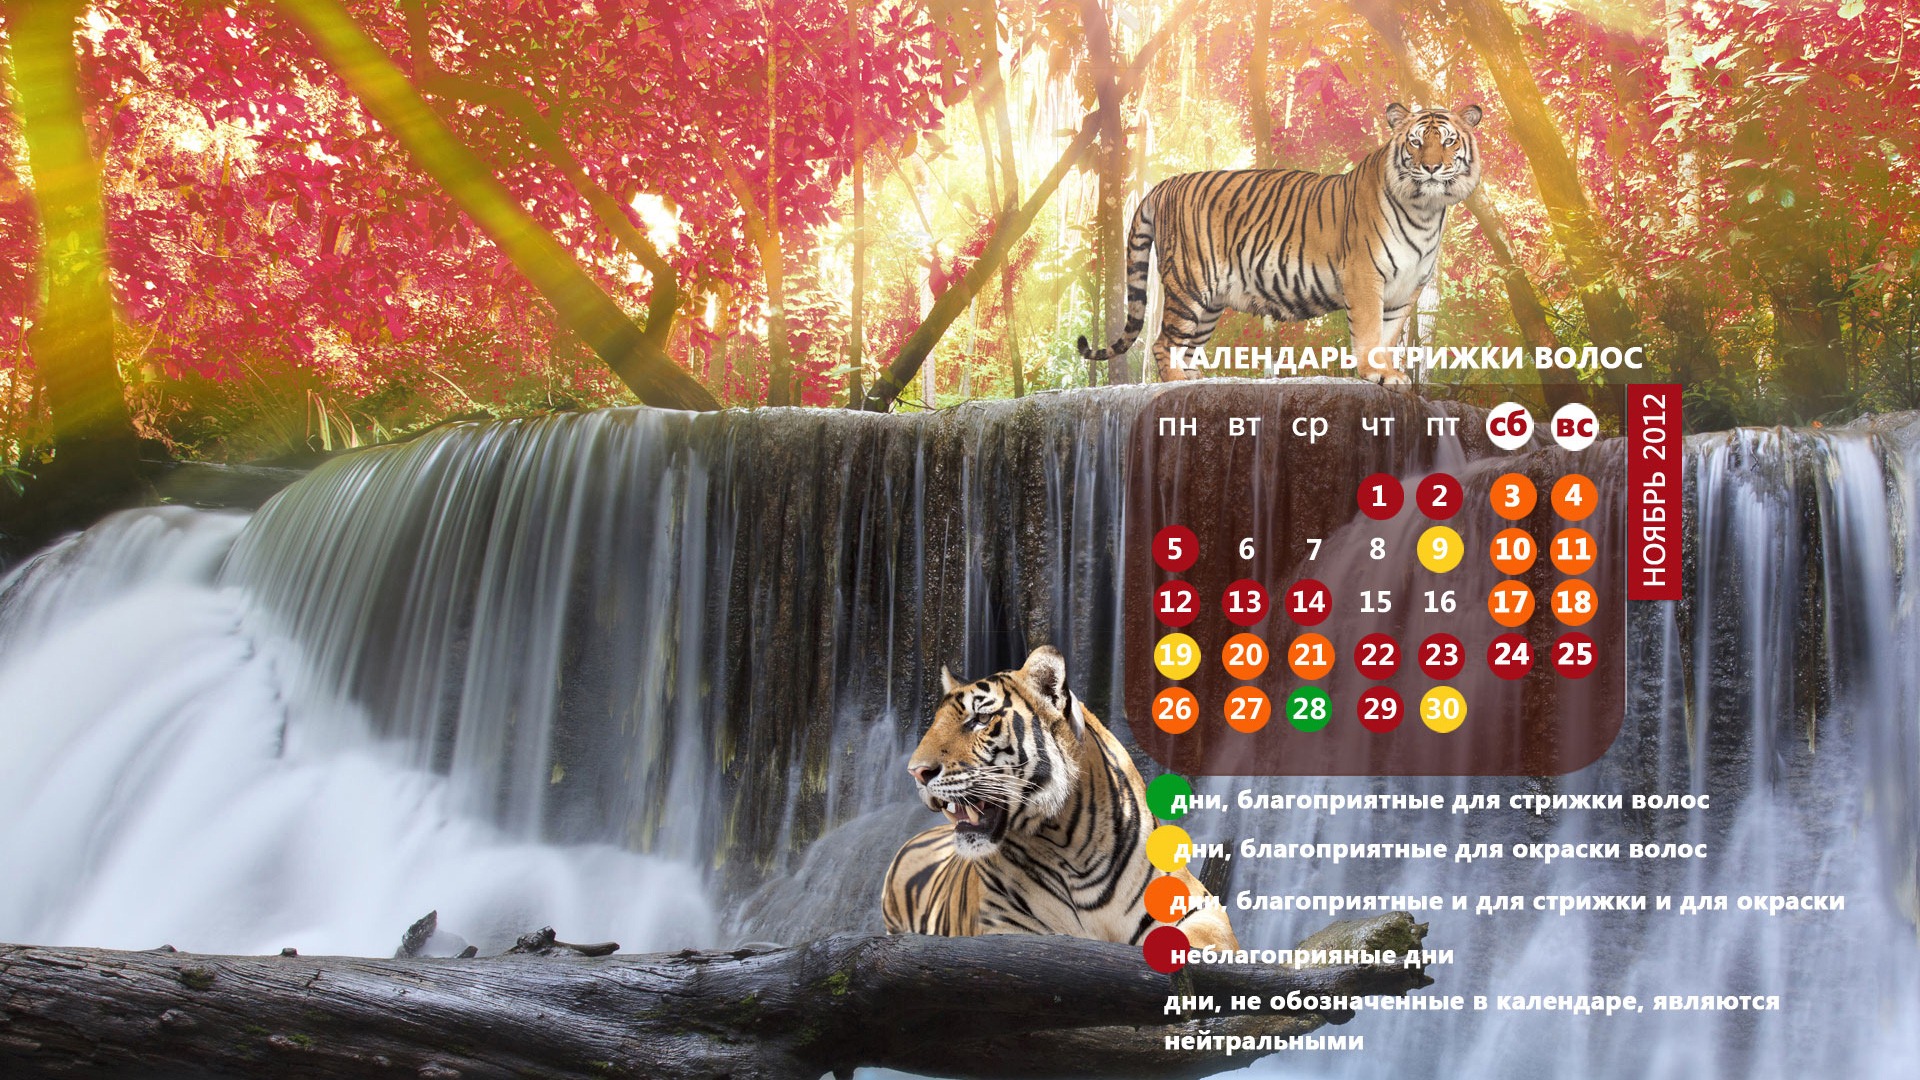 November 2012 Kalender Wallpaper (2) #18 - 1920x1080